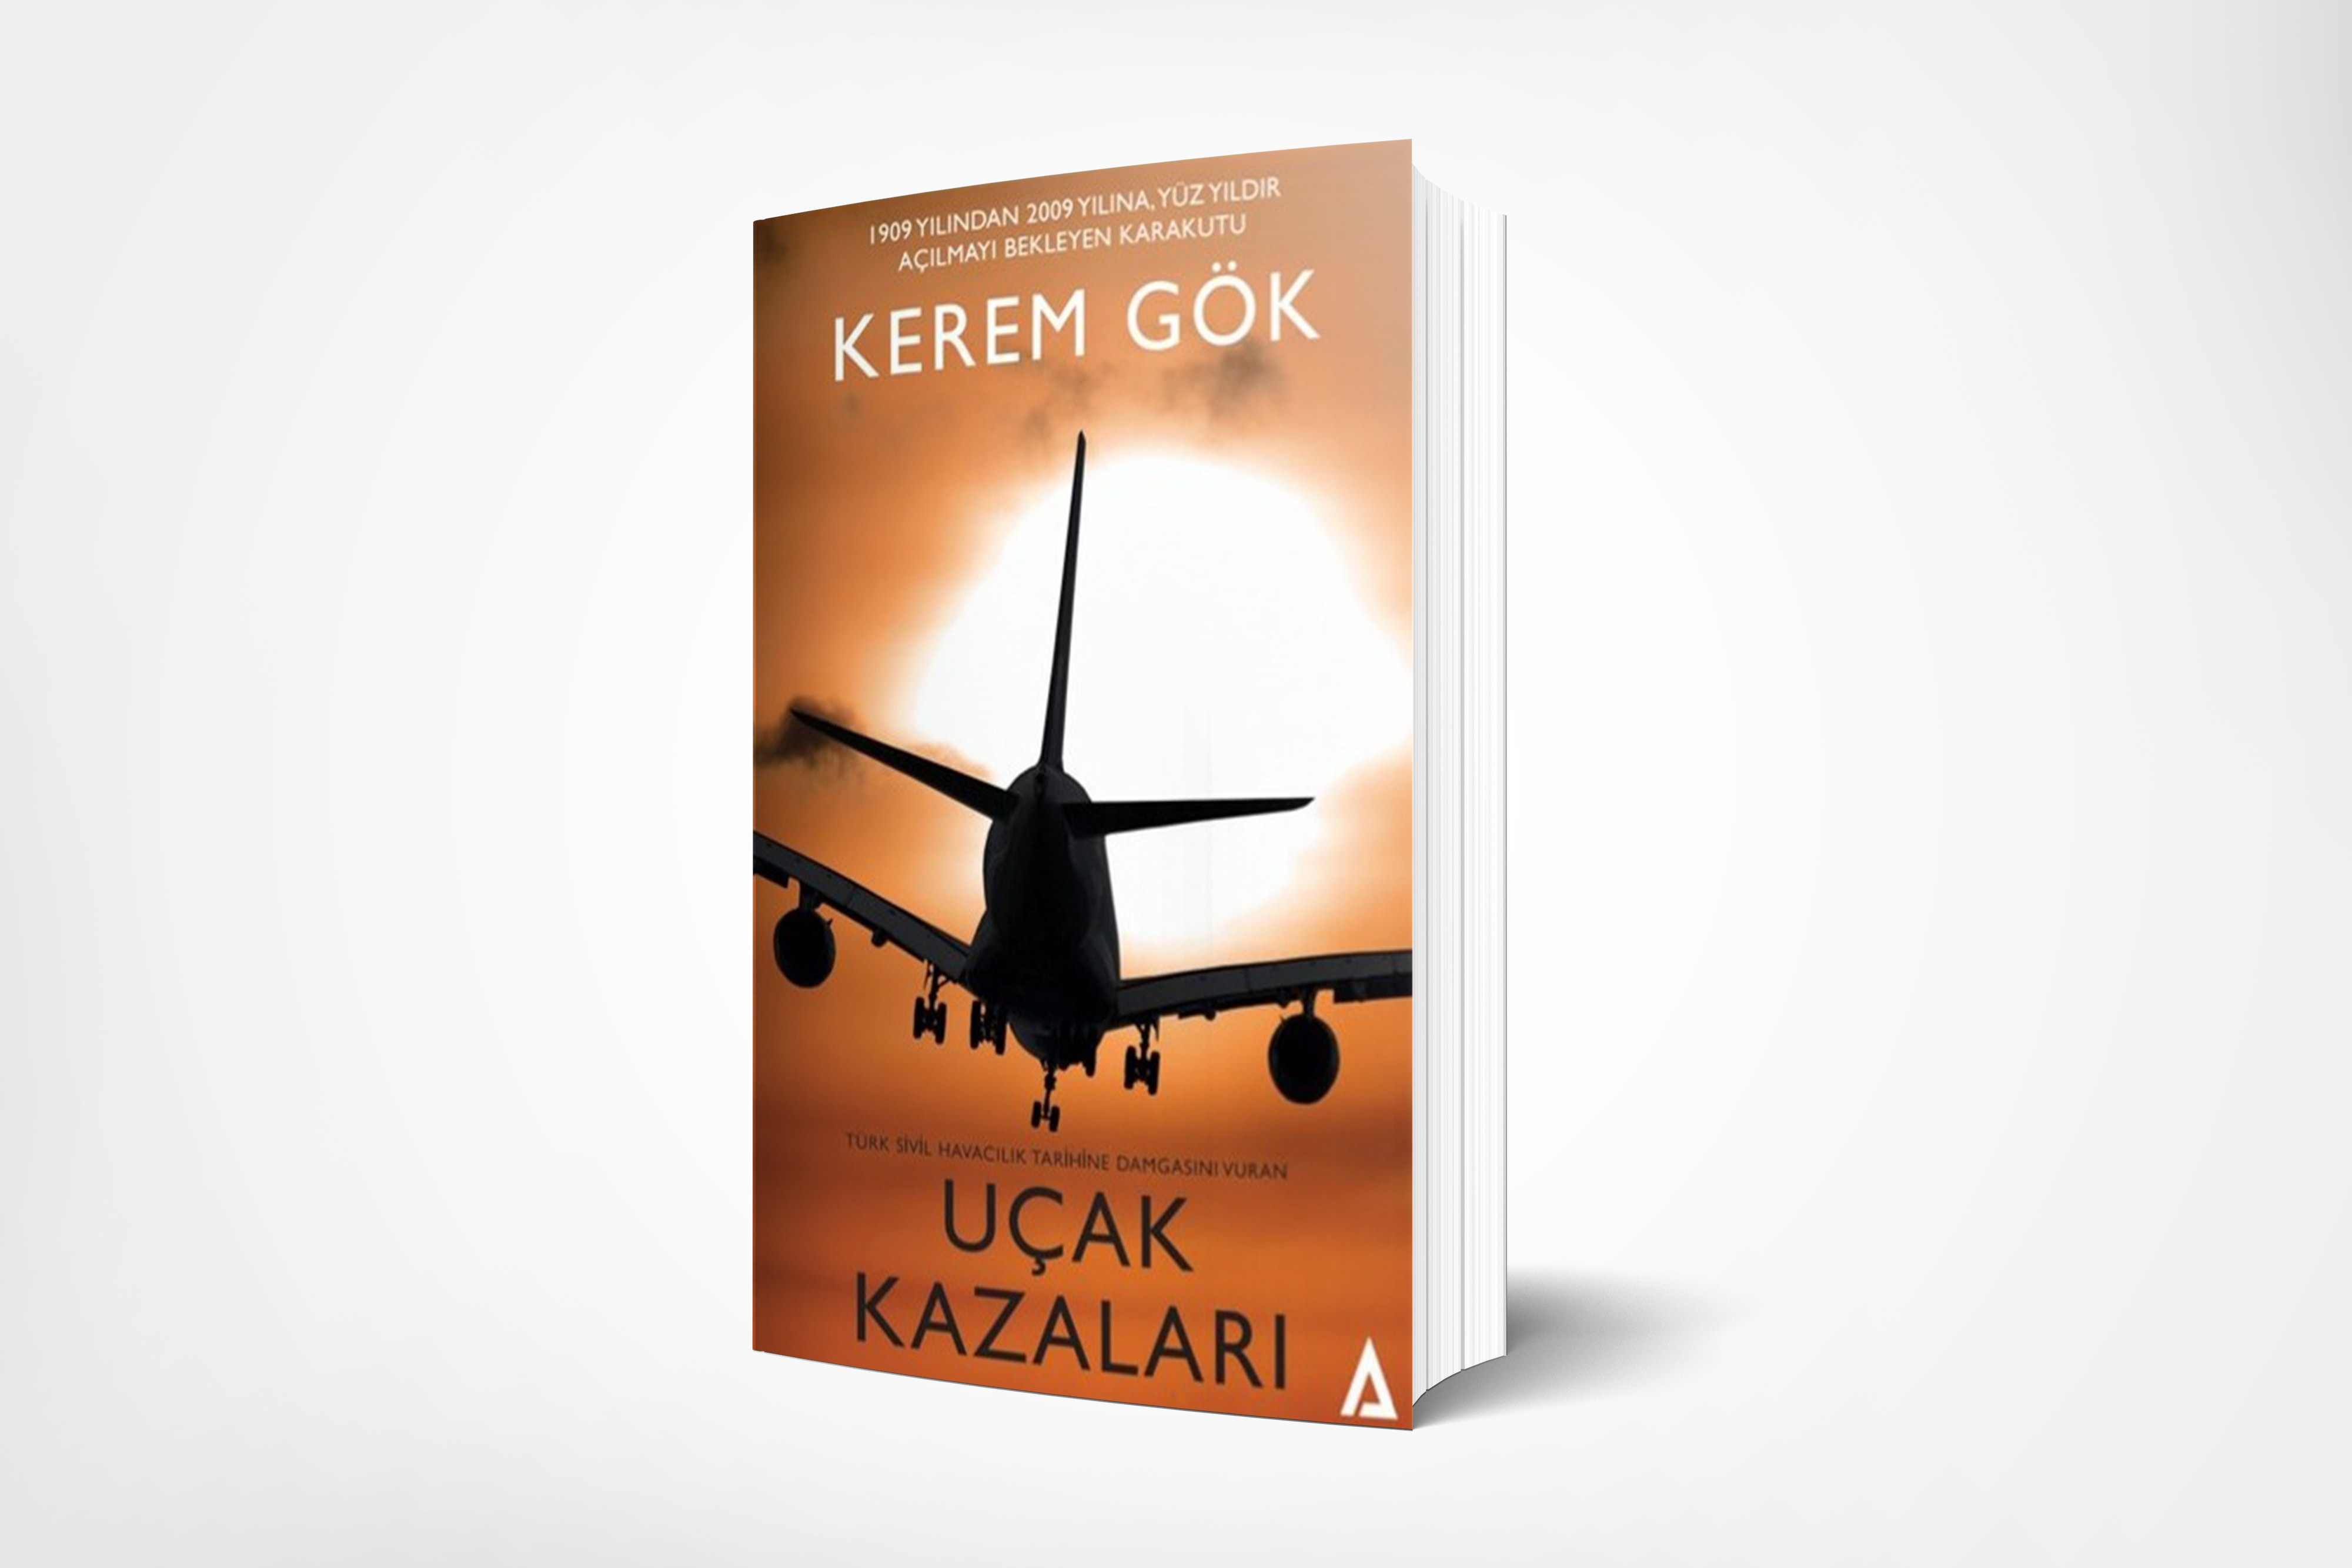 Türk Sivil Havacılık Tarihine Damgasını Vuran Uçak Kazaları (Aircraft Accidents That Left Their Mark On The History Of Turkish Civil Aviation)